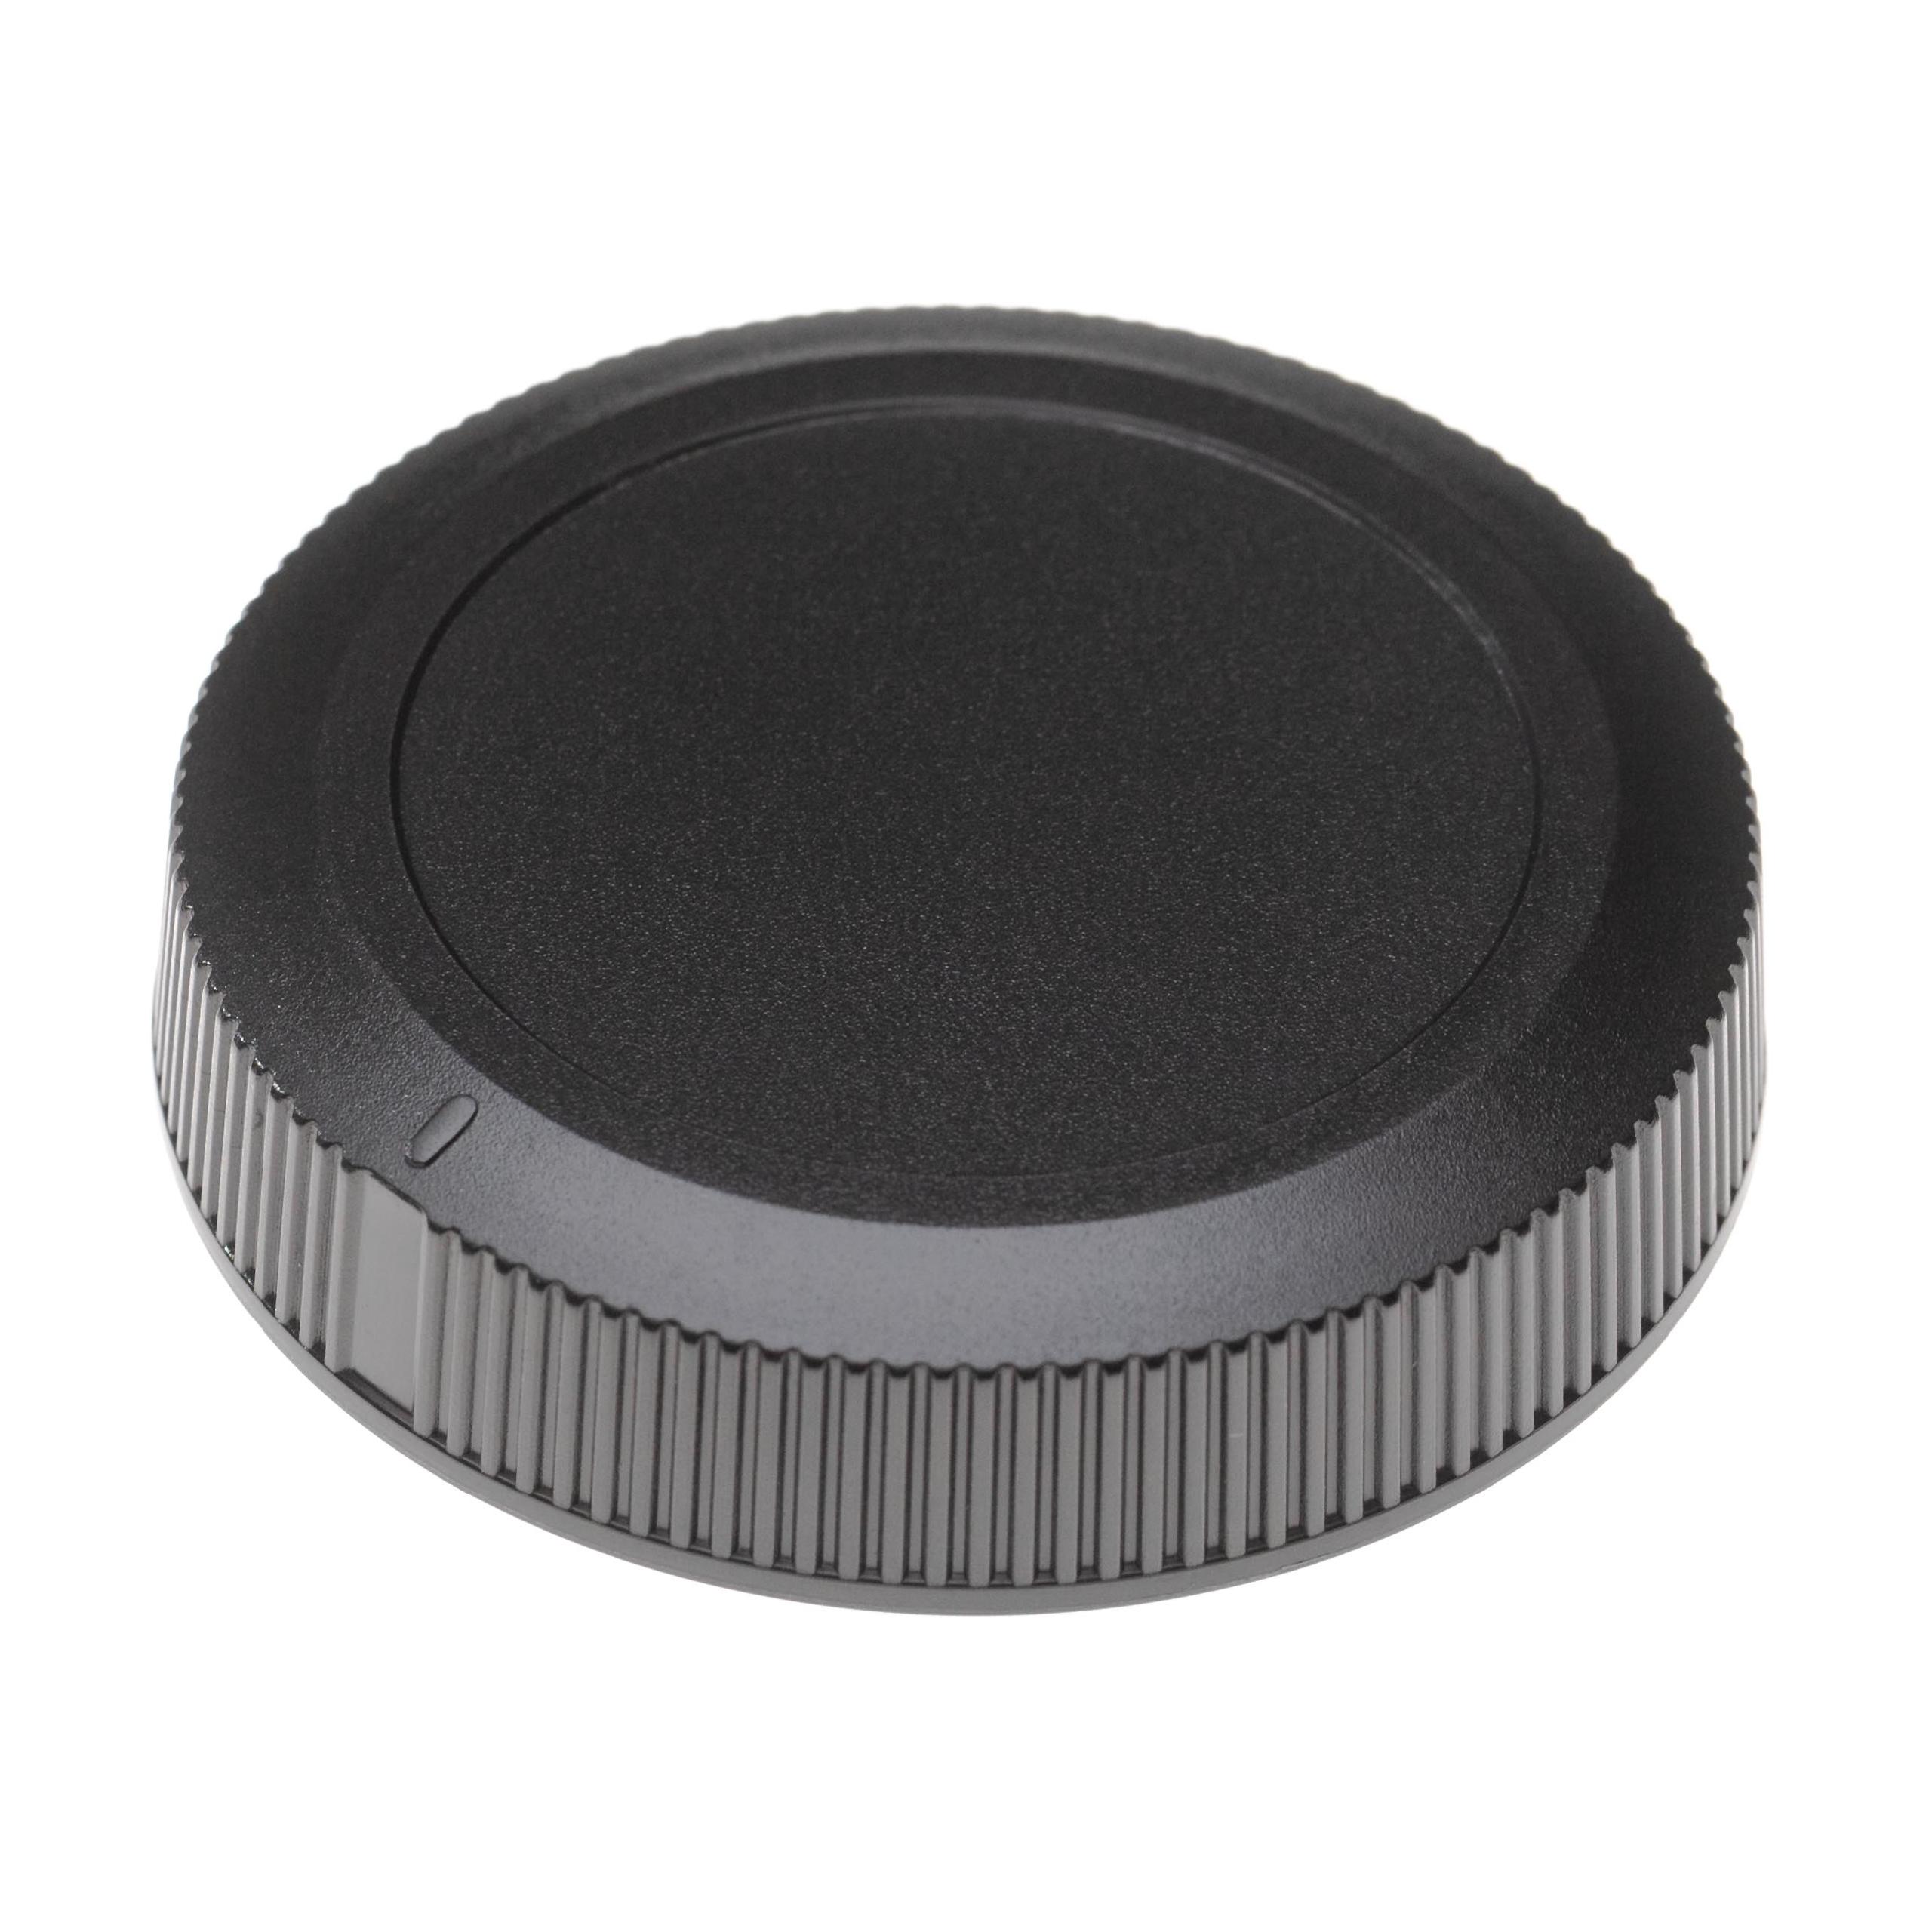  Lens Rear Cap for Canon EOS RF lenses with RF bayonet - Black